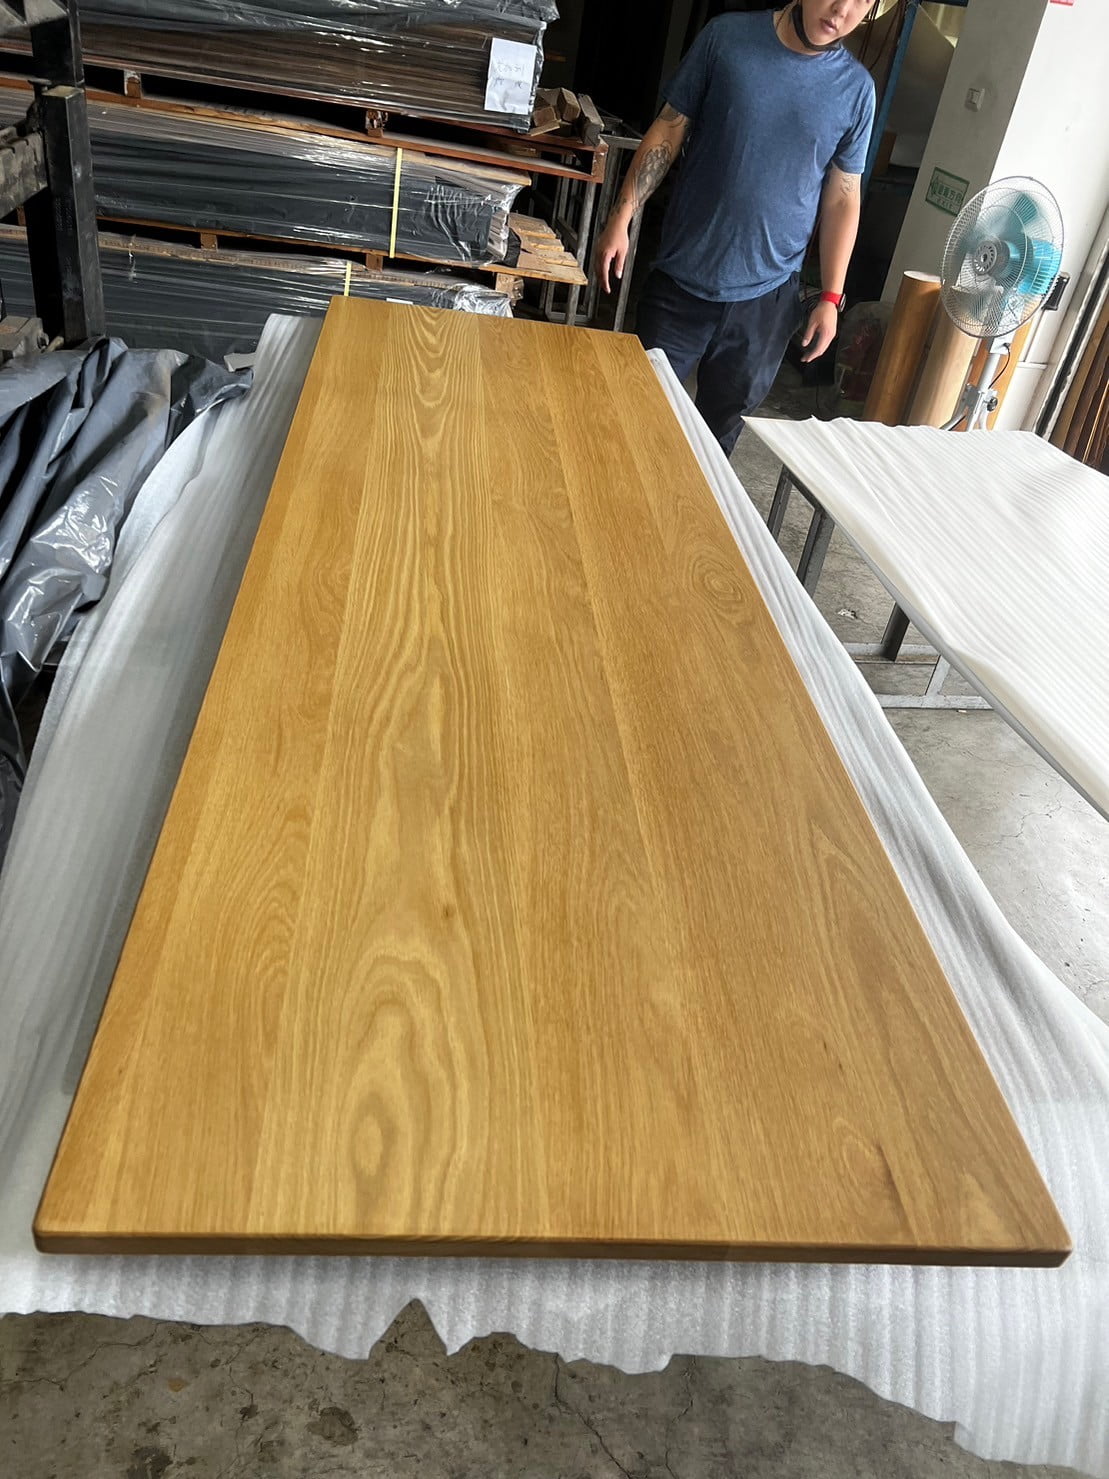 LINE ALBUM 桌凳 230426 73 1 木制品 木製 家具訂製 高雄家具 傢俱 客製化,高雄家具,高雄傢俱,IKEA,桌板訂製,訂製,專屬,木製品